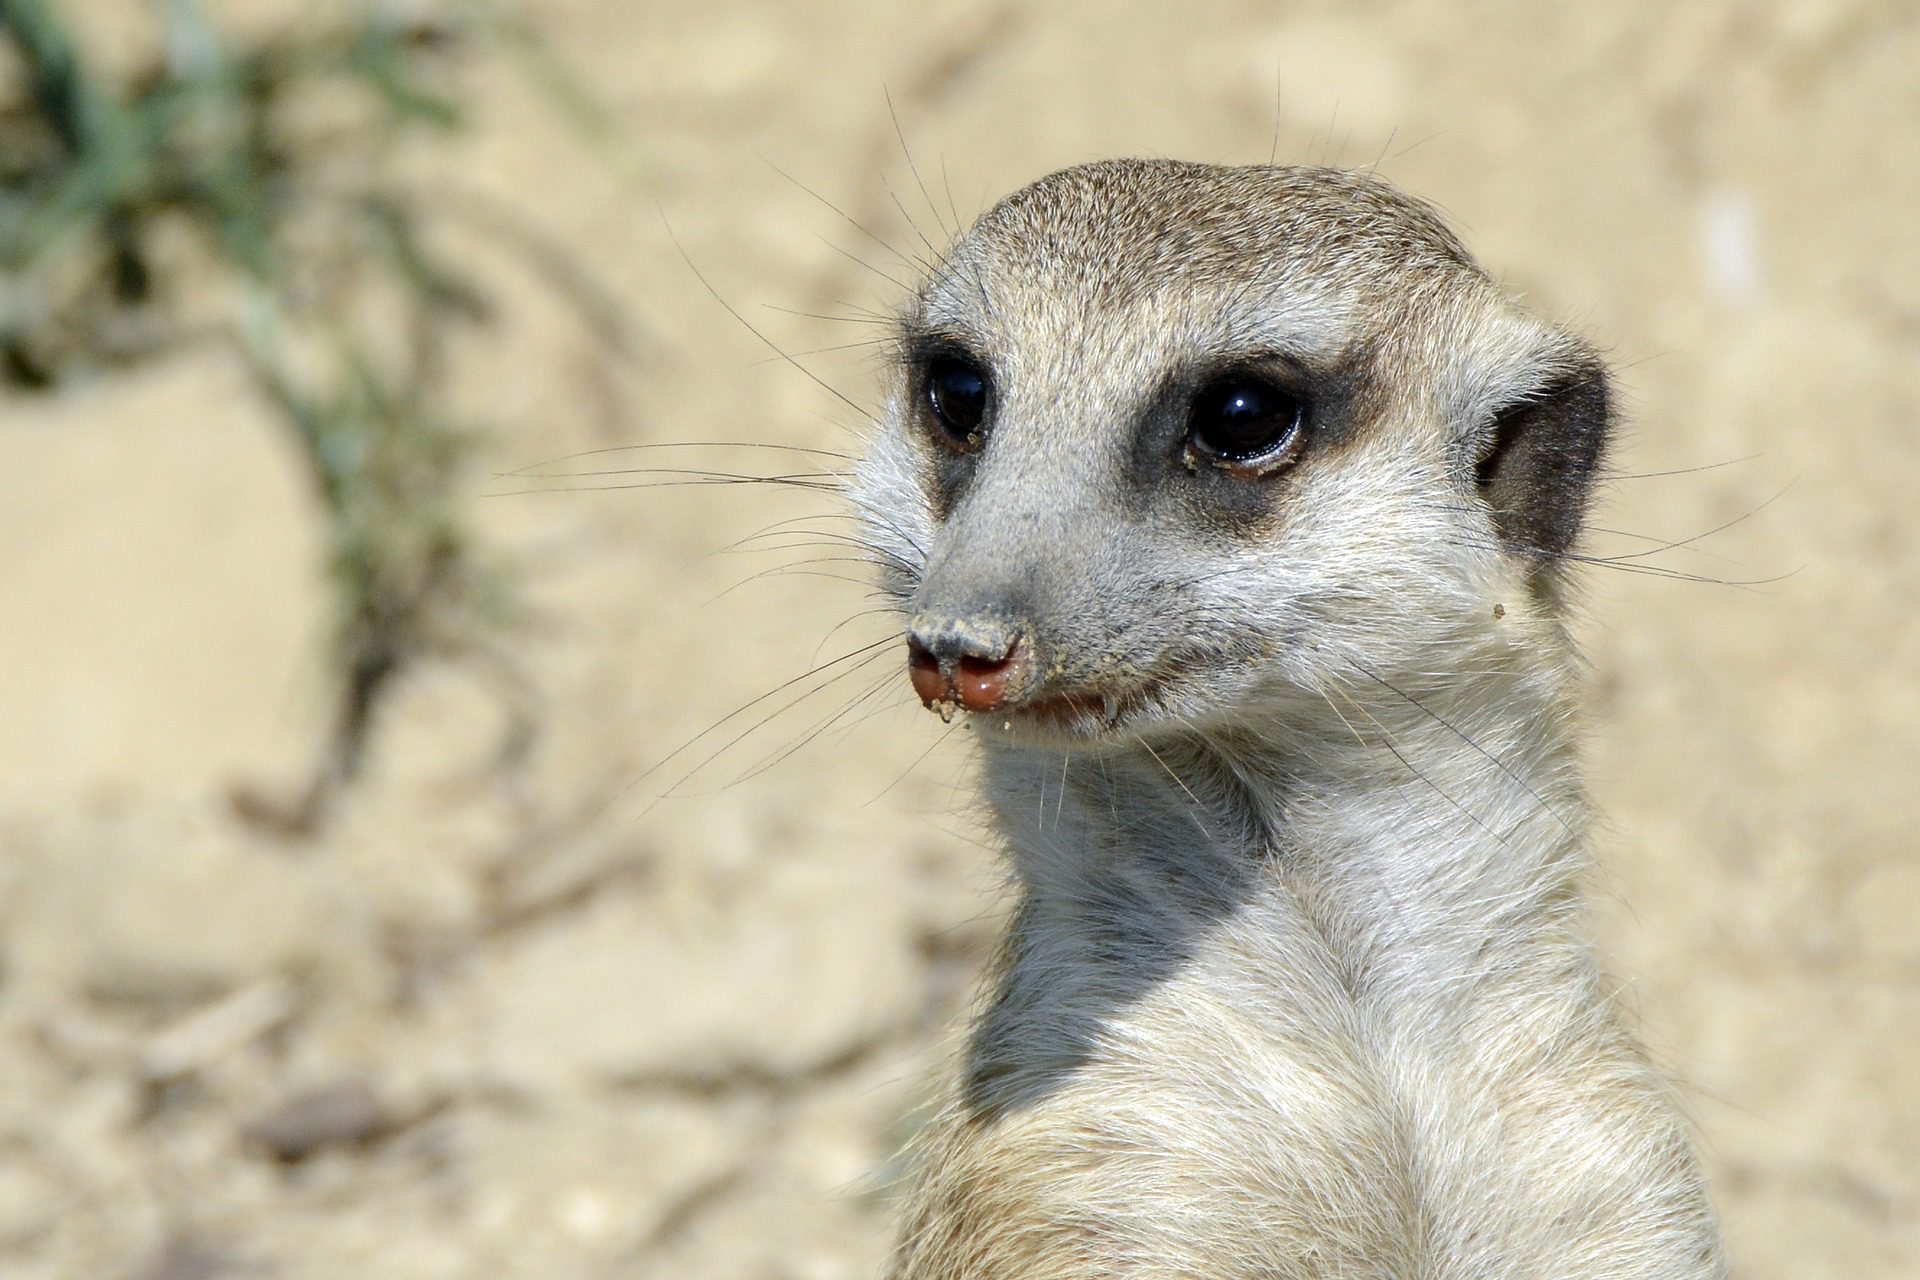 A meerkat looking alert